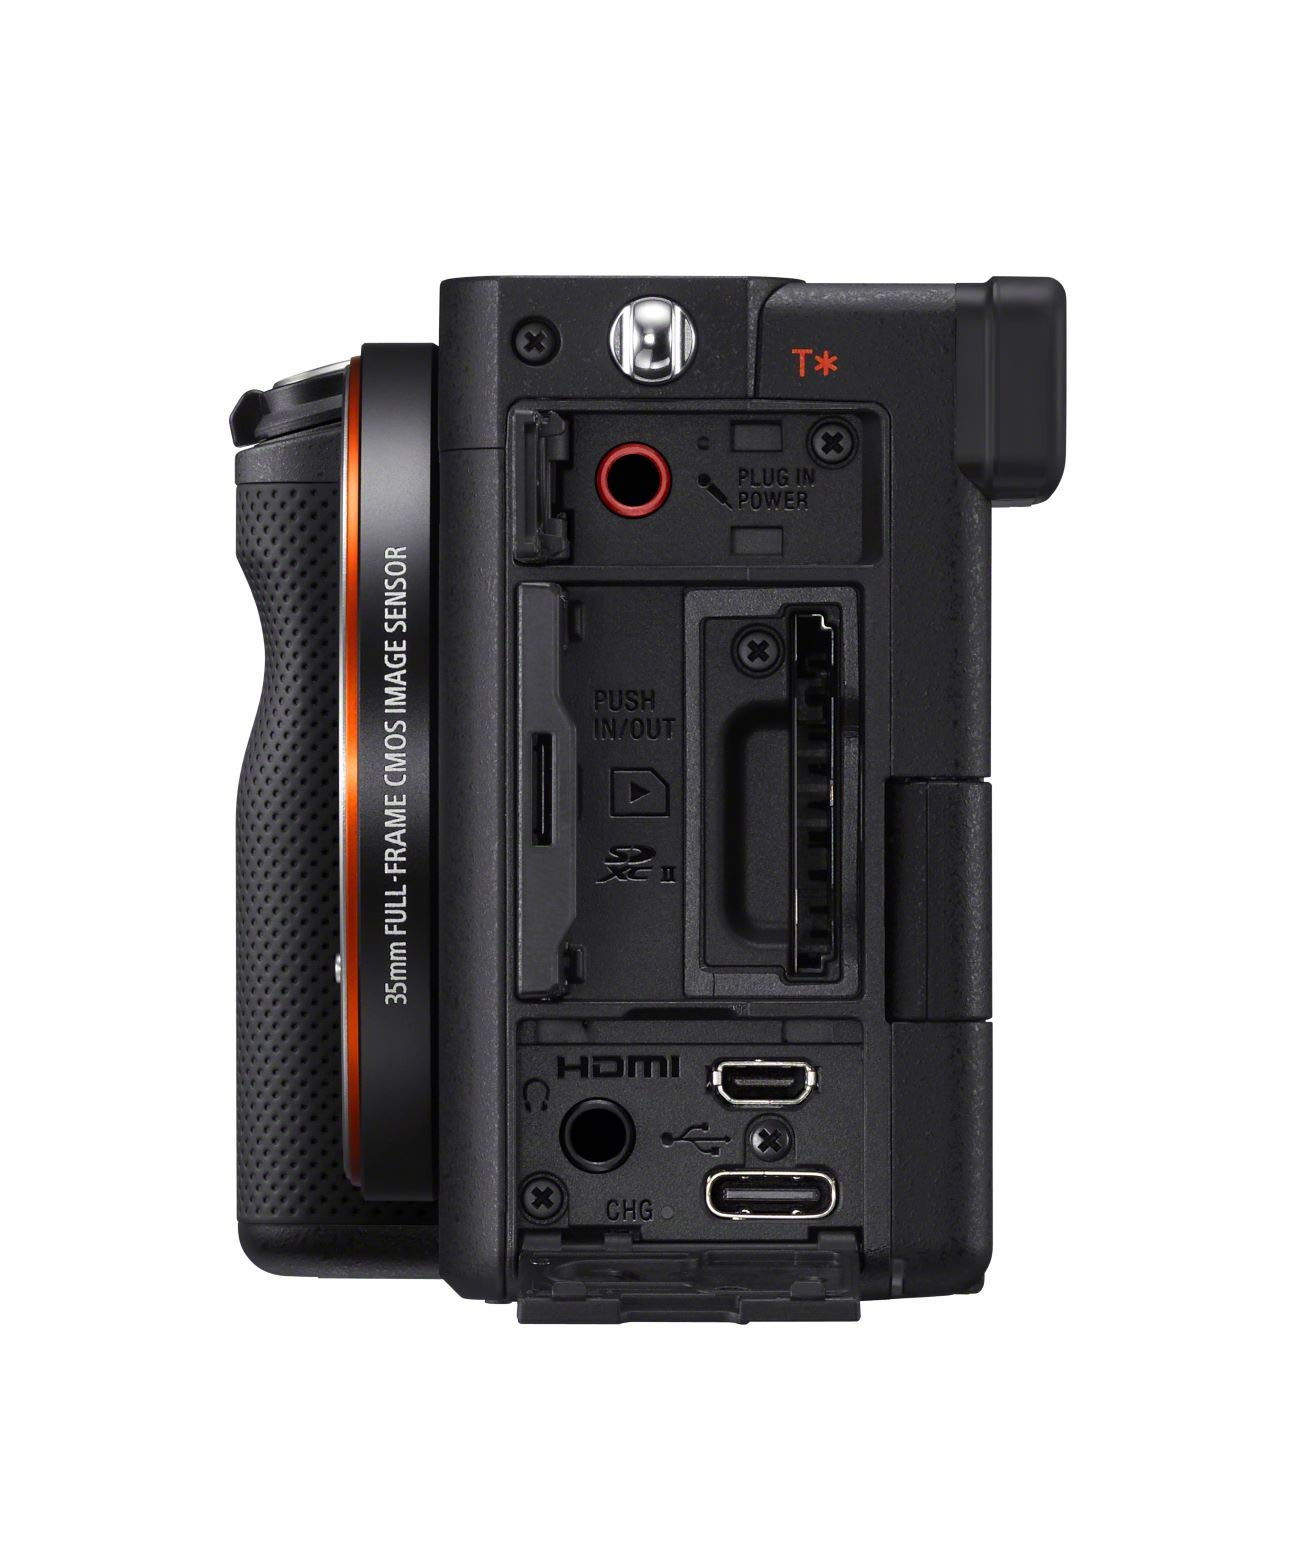 Sony Alpha 7C Full-Frame Mirrorless Camera - Black (ILCE7C/B)